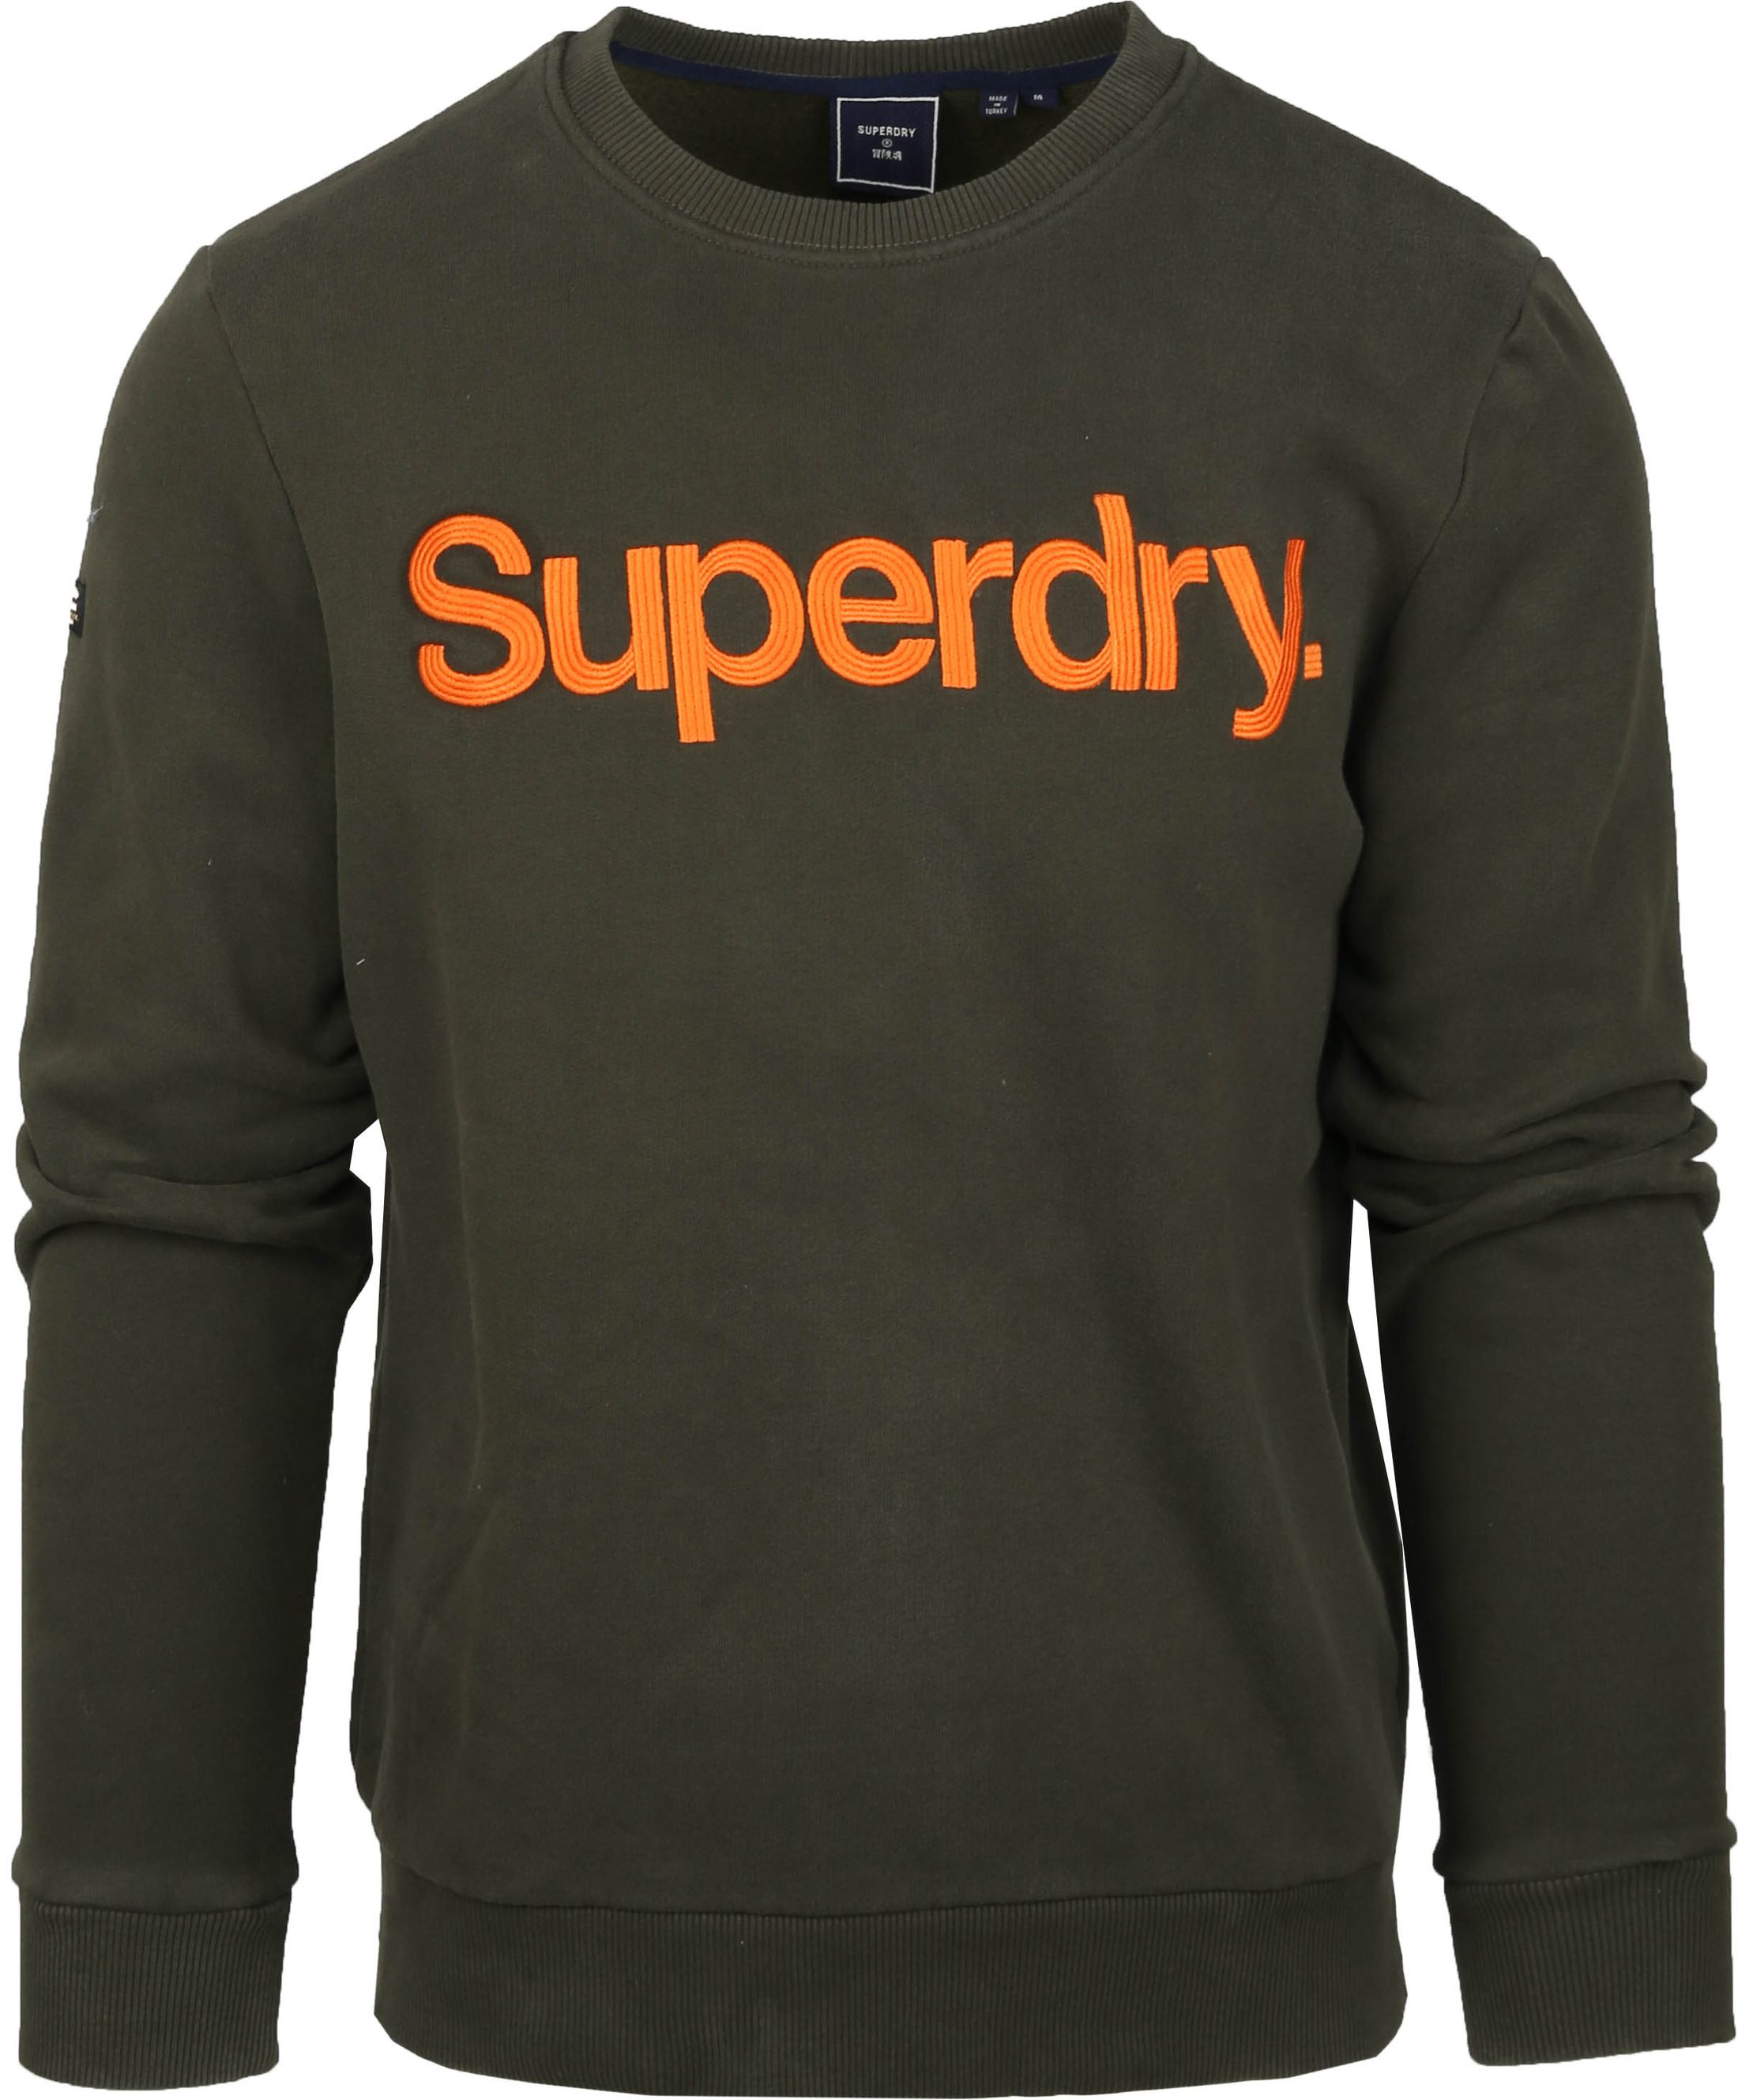 Superdry Sweater Green Dark Green size L